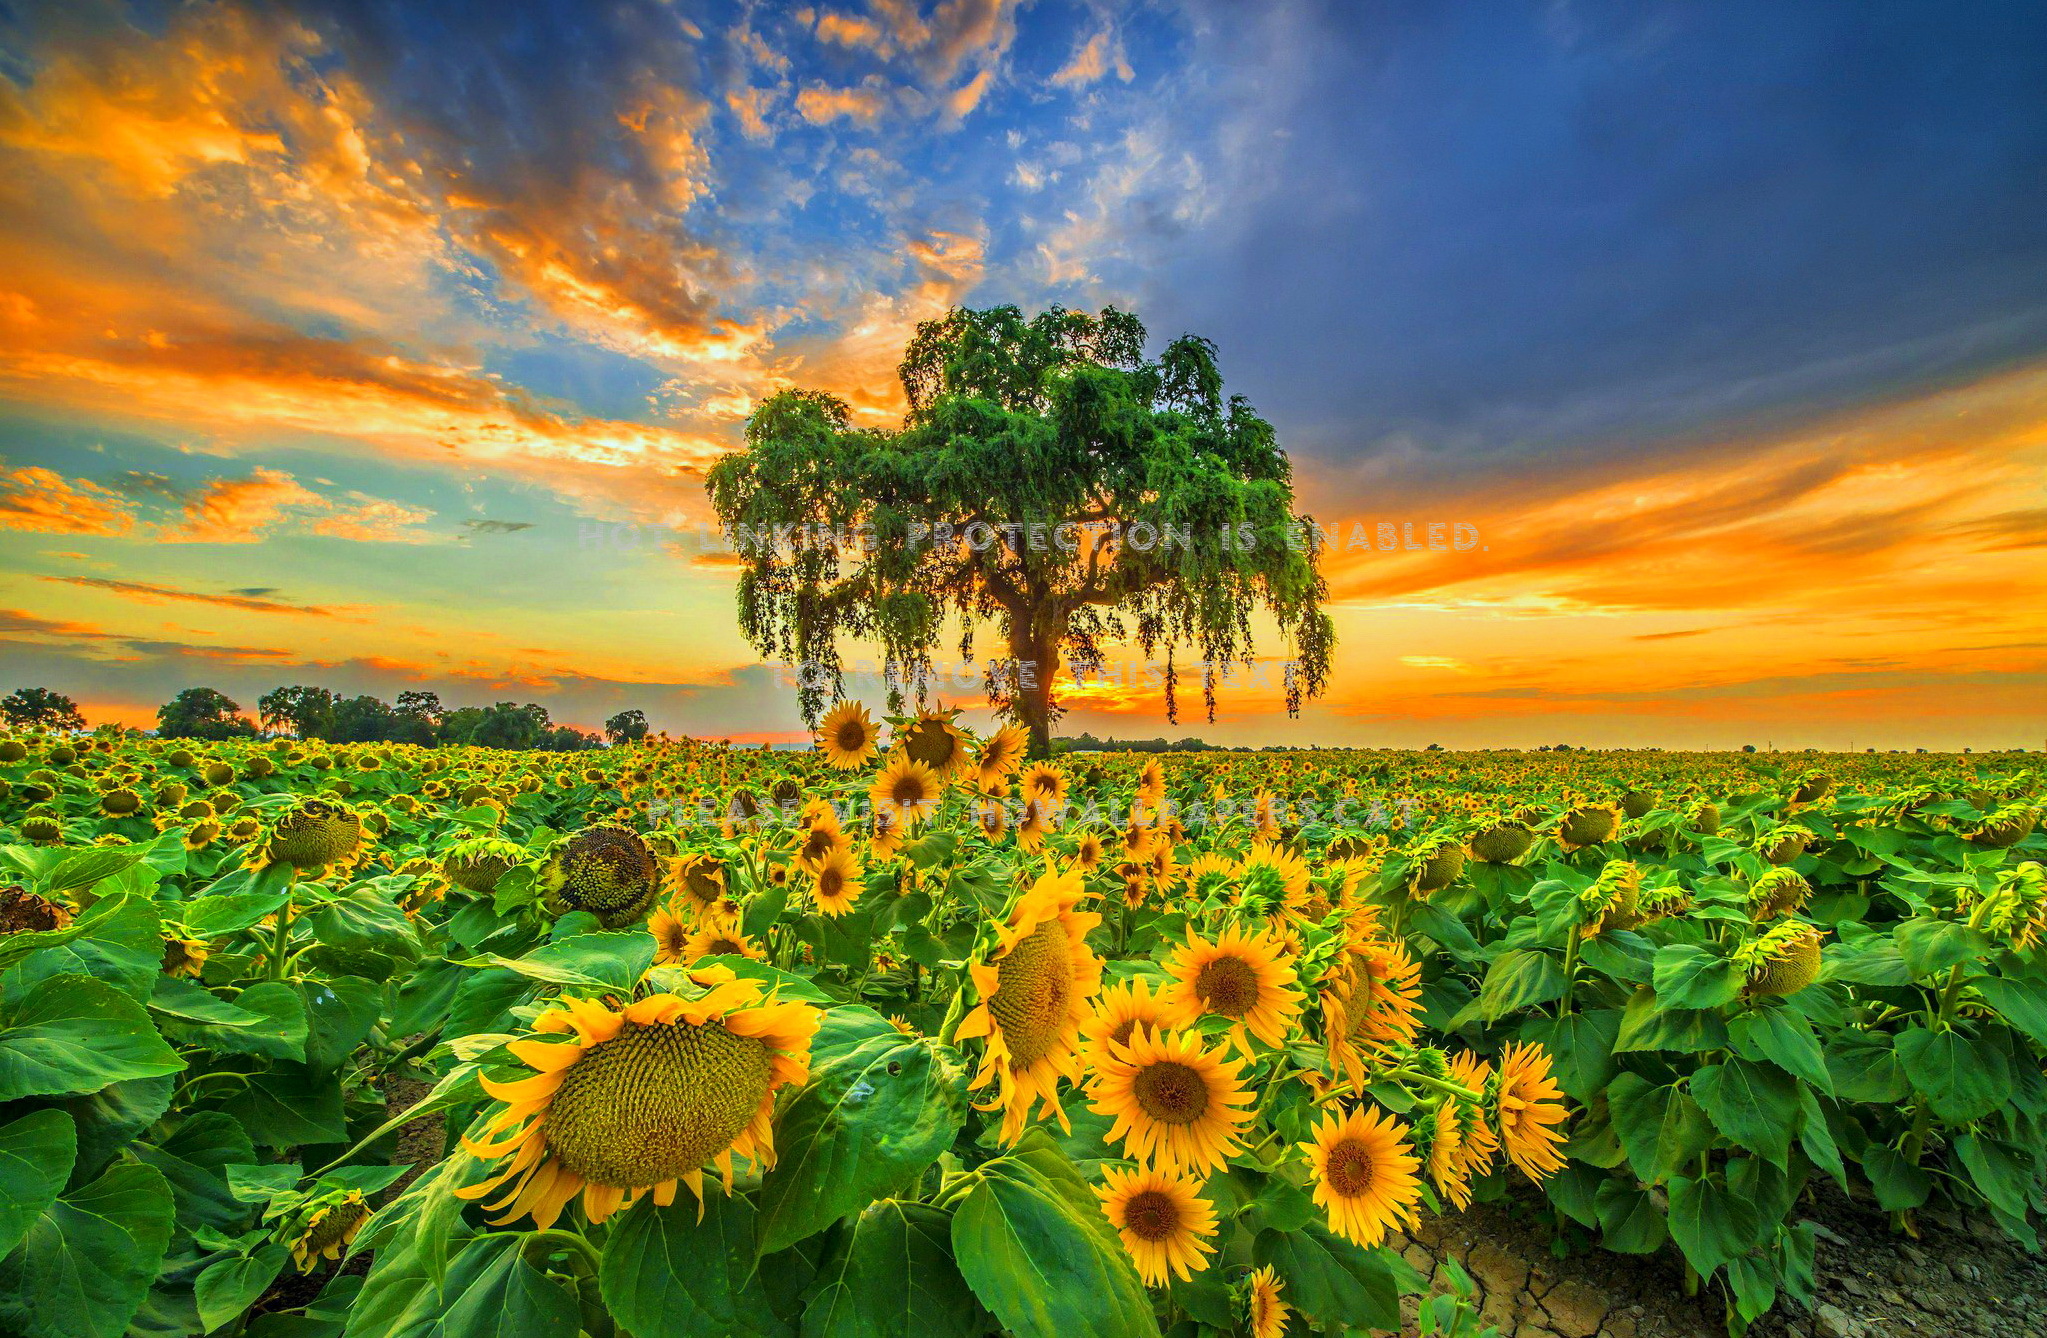 lovely nature wallpaper,sunflower,nature,flower,natural landscape,sky